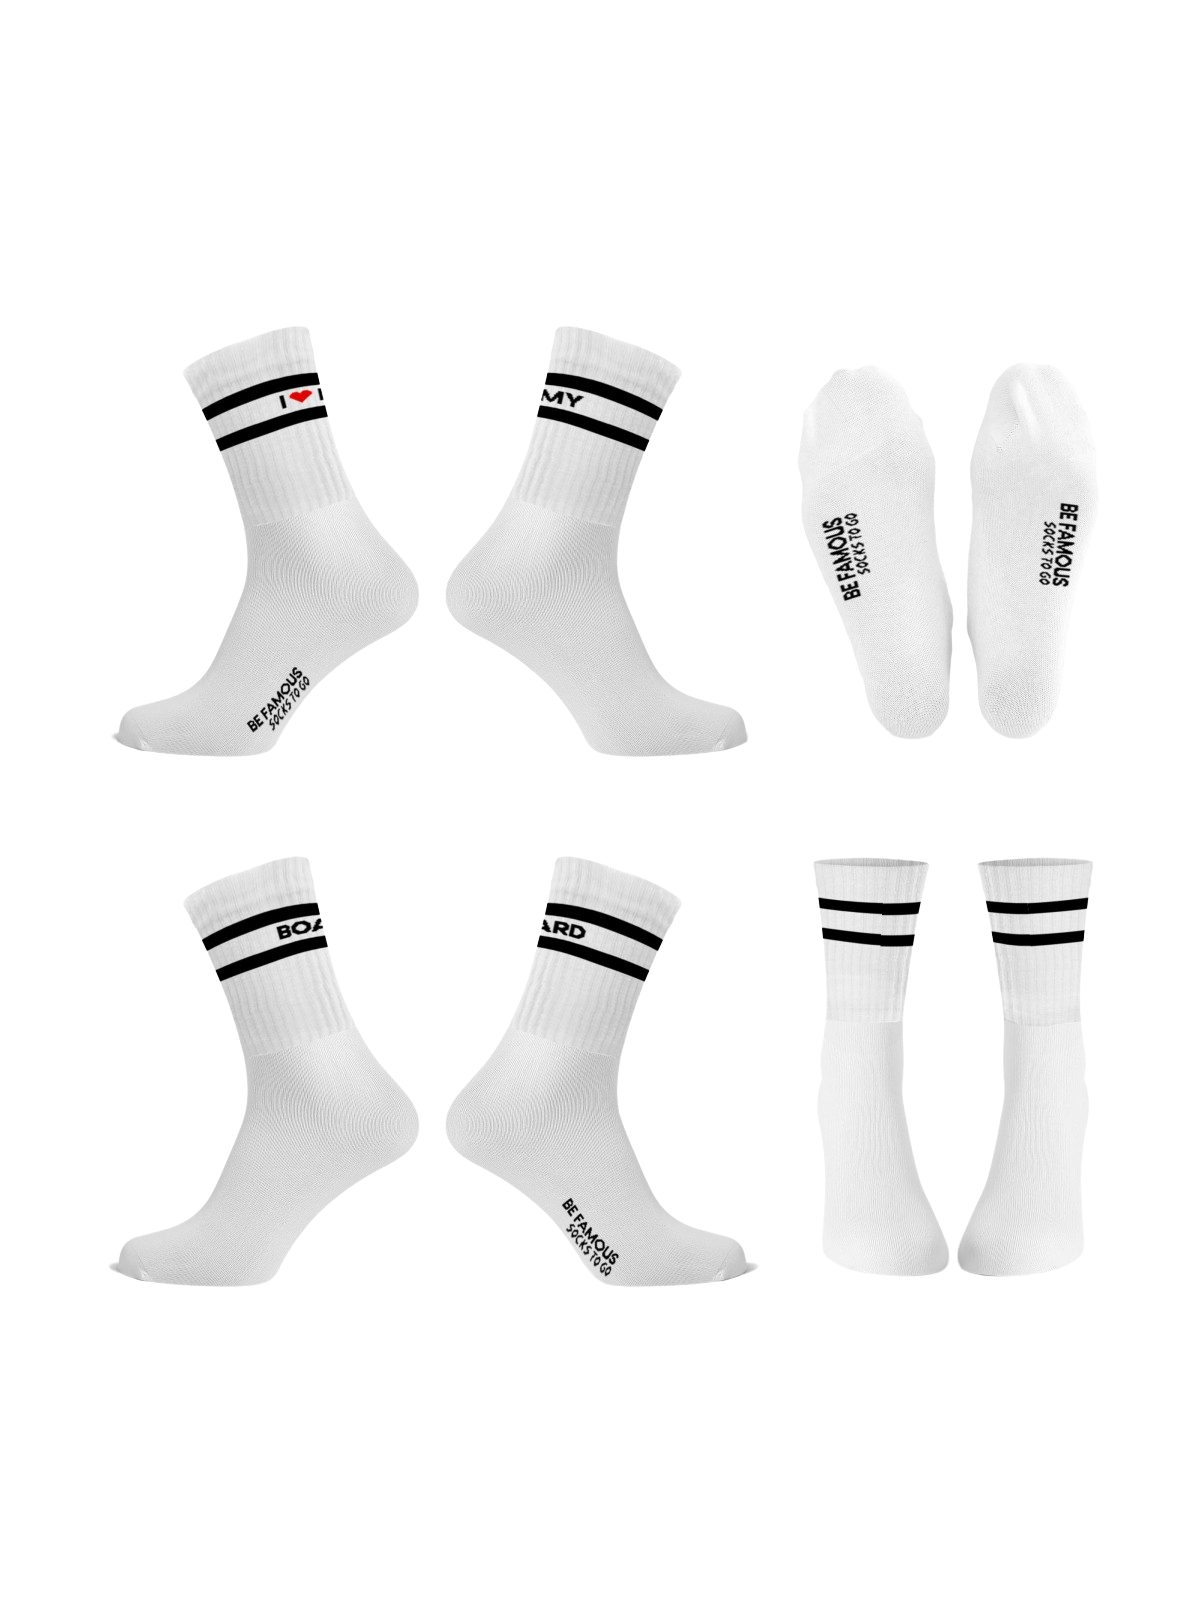 Be Famous  Socks to go  Statement  Socken I ♥ MY BOARD BFSO-33 white socks / black stripe / black-red ♥ statement 36-41